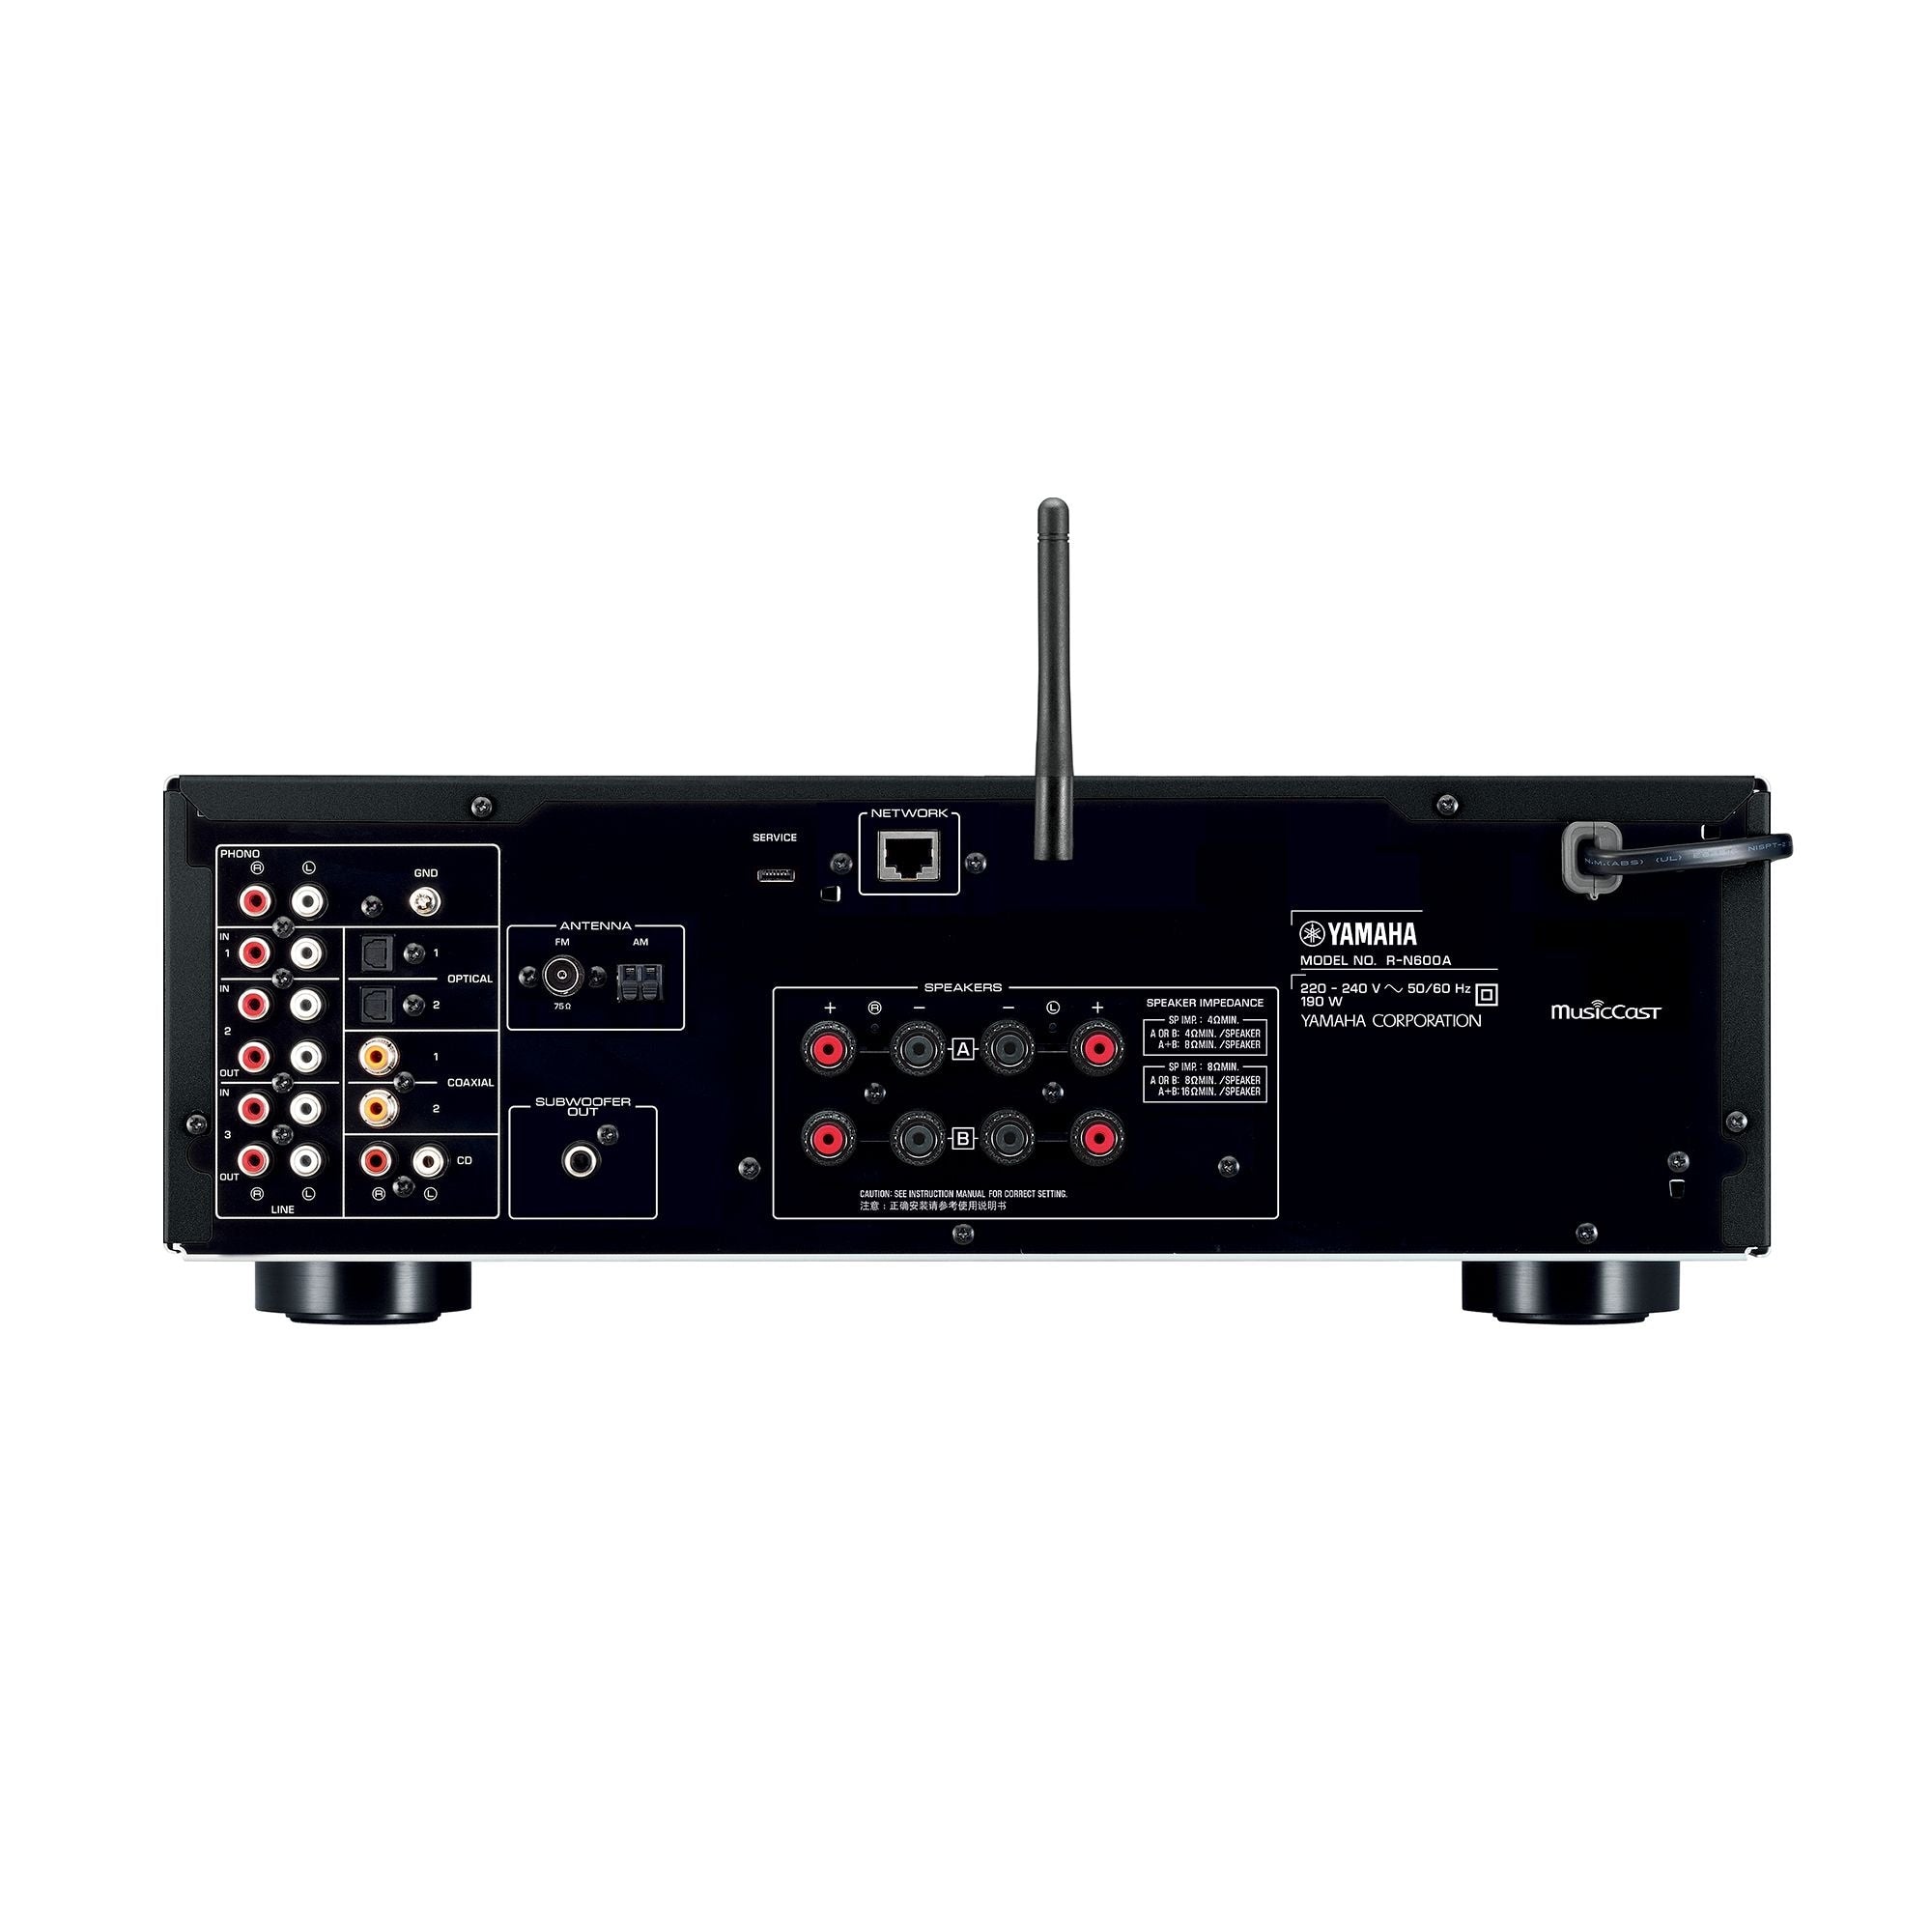 Yamaha - R-N600A - Network Receiver Australia